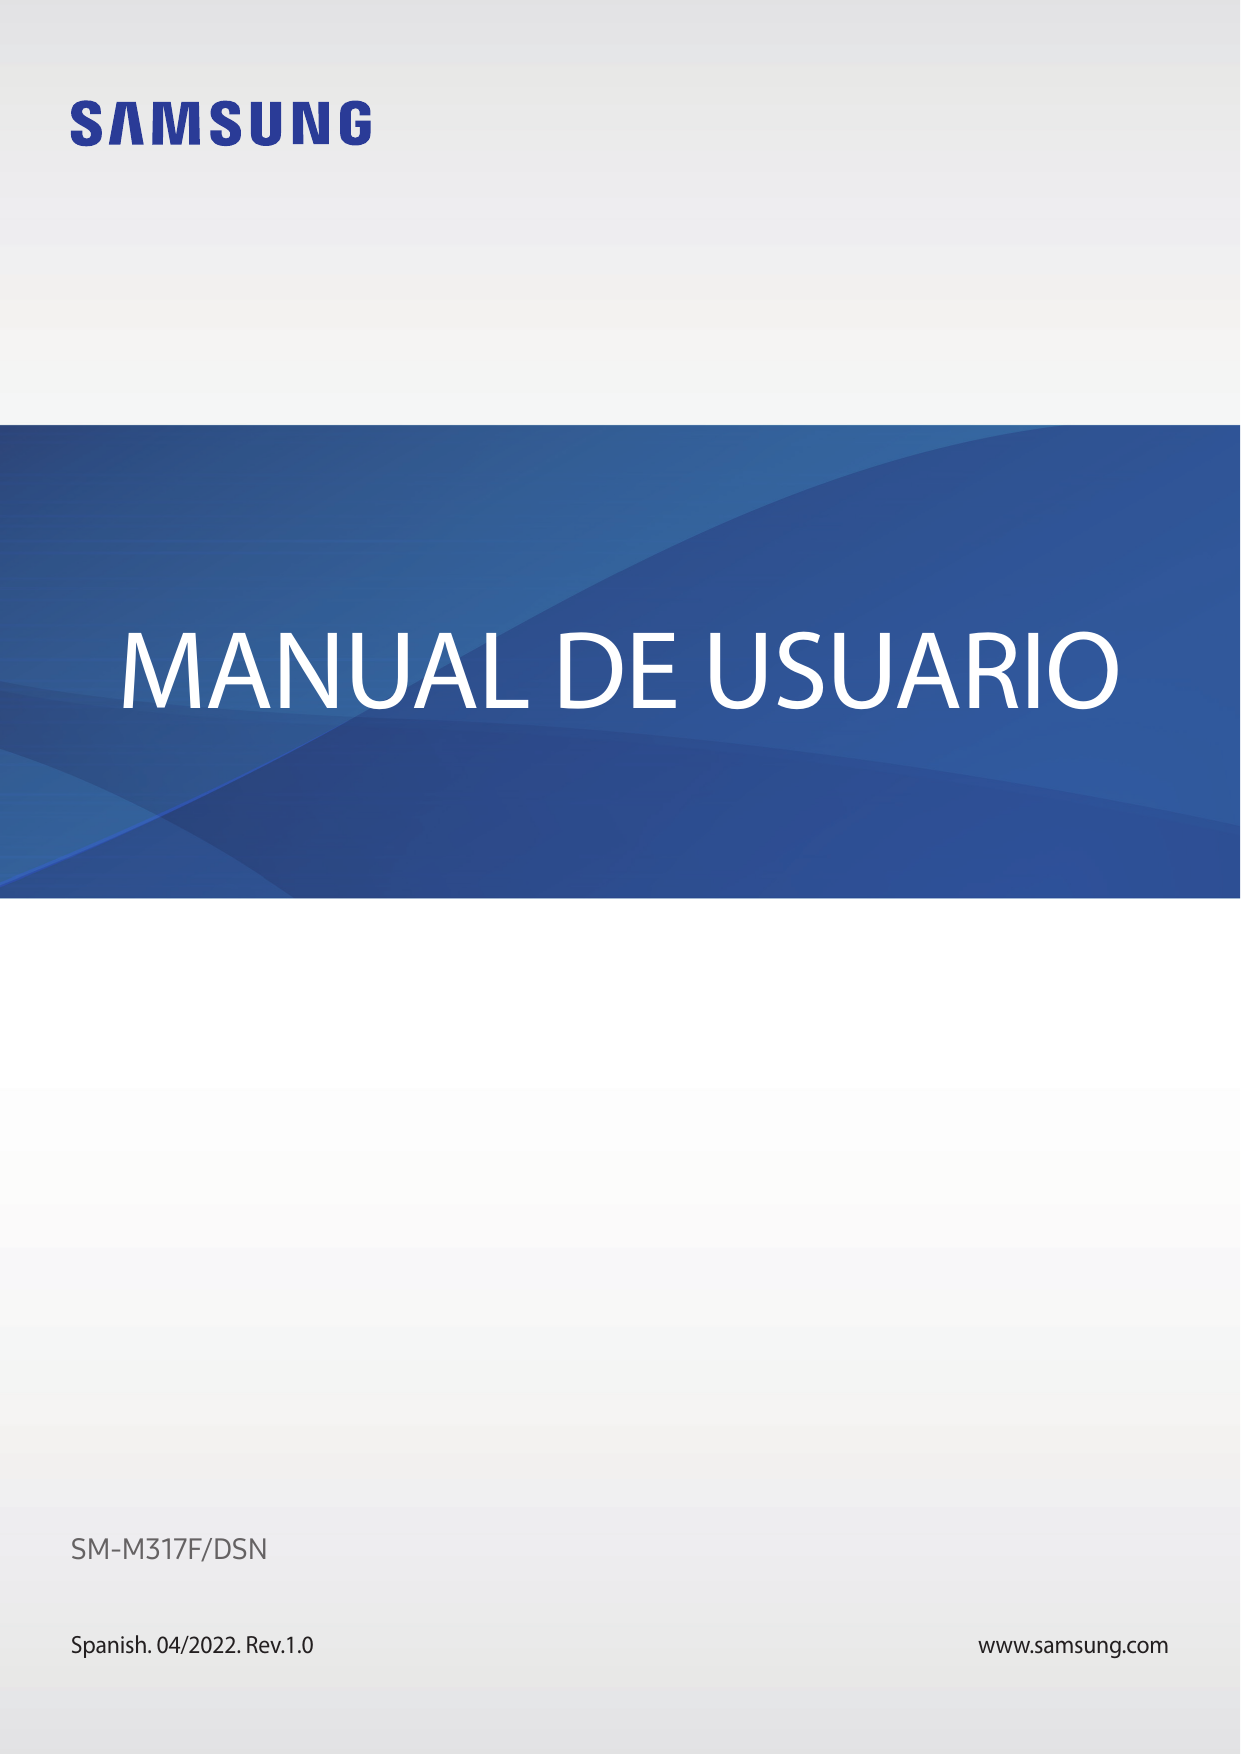 MANUAL DE USUARIOSM-M317F/DSNSpanish. 04/2022. Rev.1.0www.samsung.com